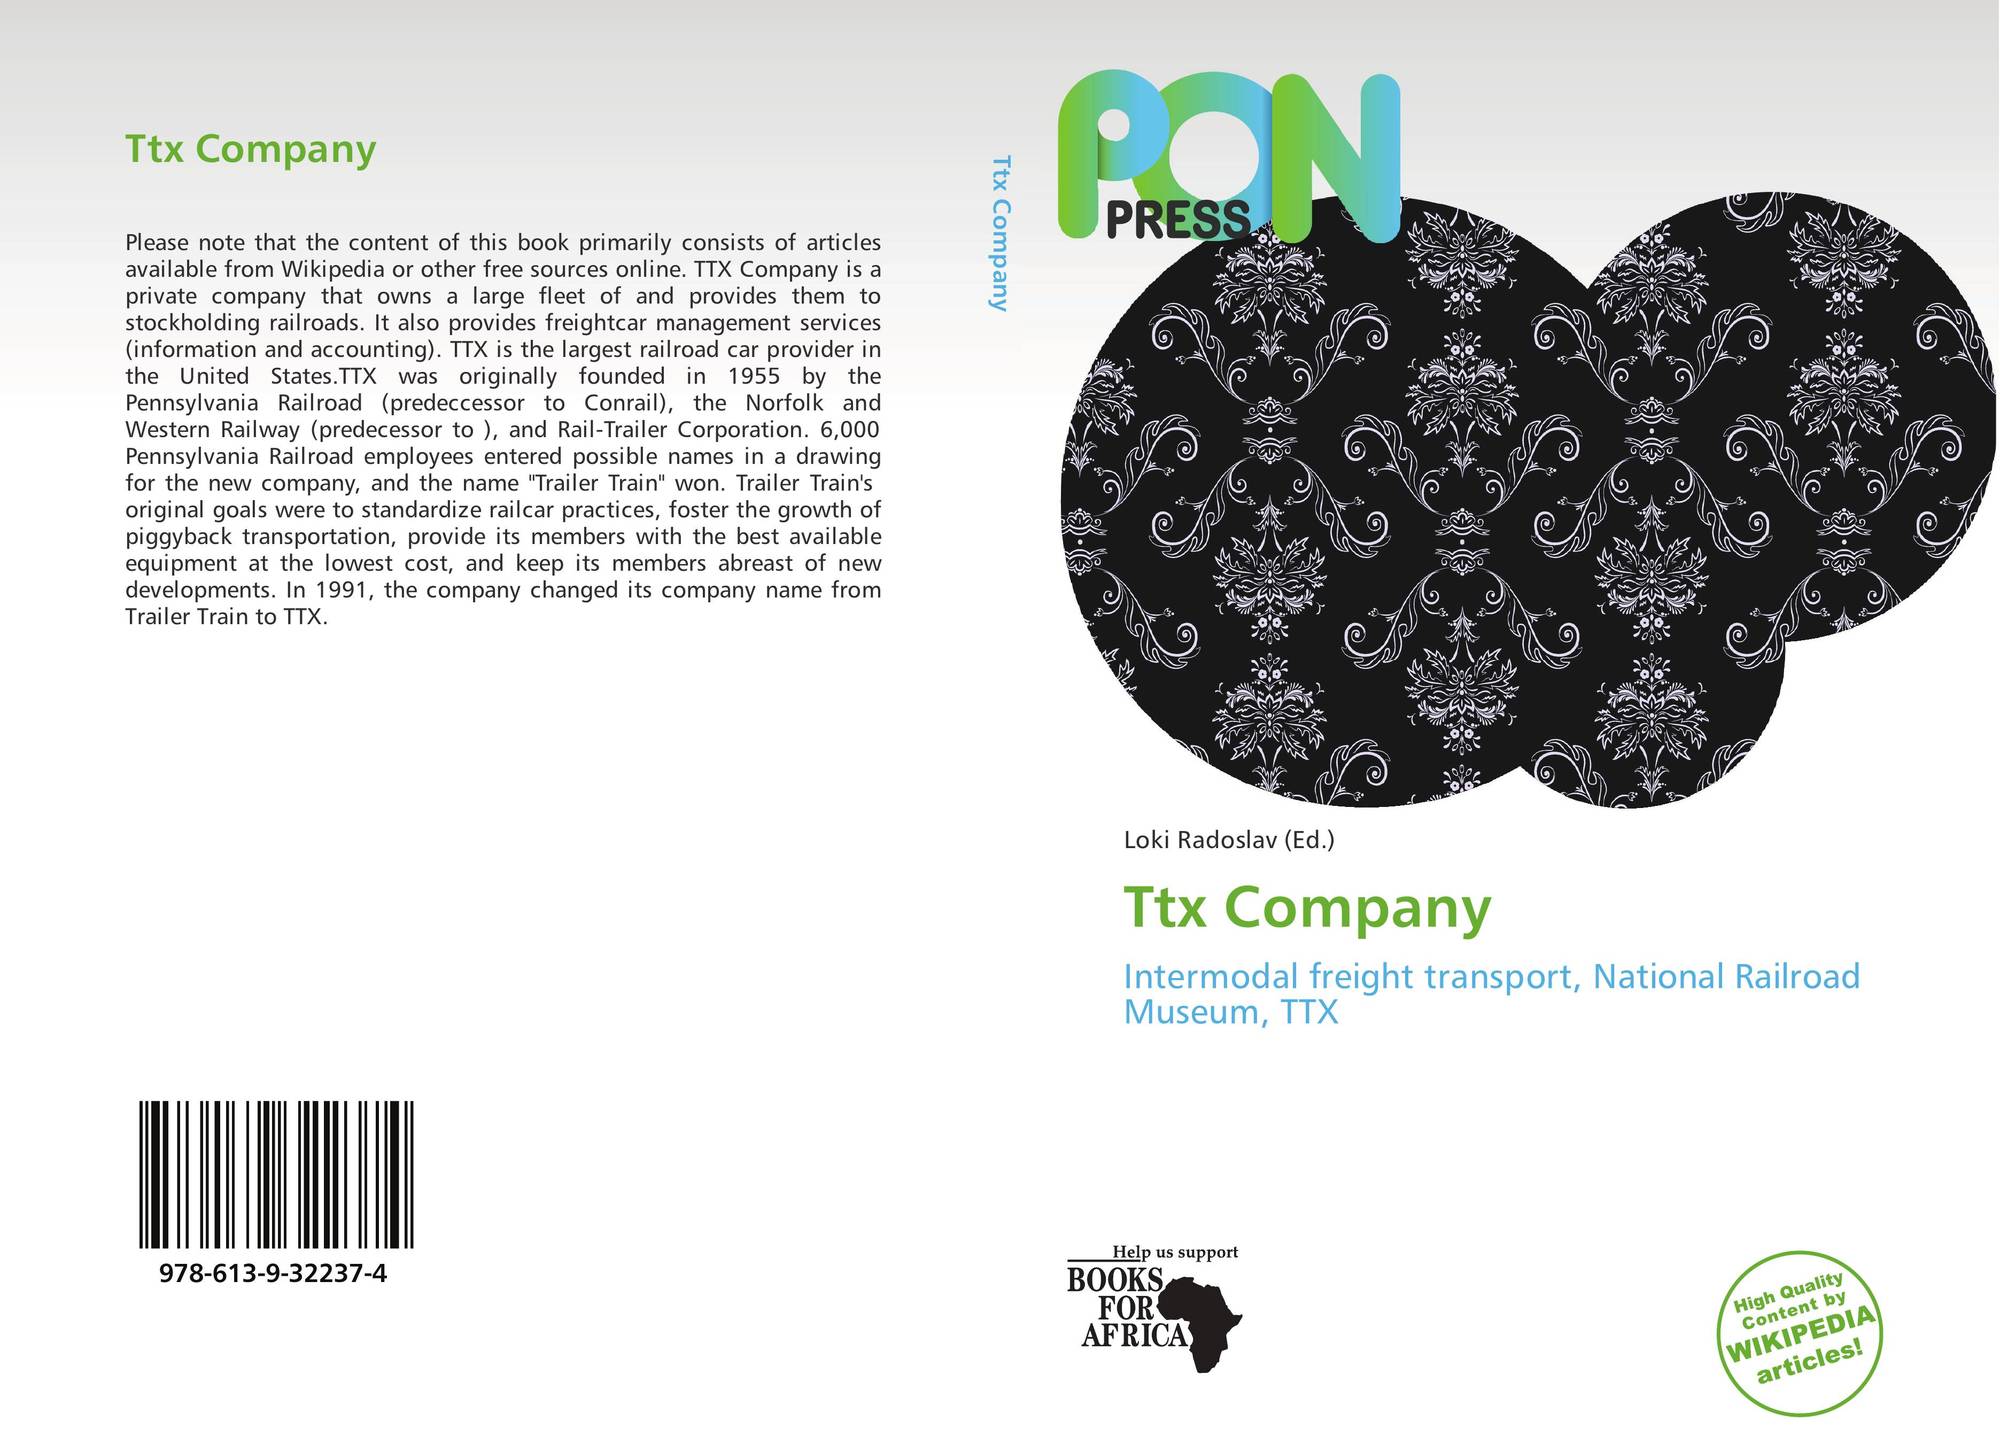 TTX Company Logo - Ttx Company, 978-613-9-32237-4, 6139322375 ,9786139322374